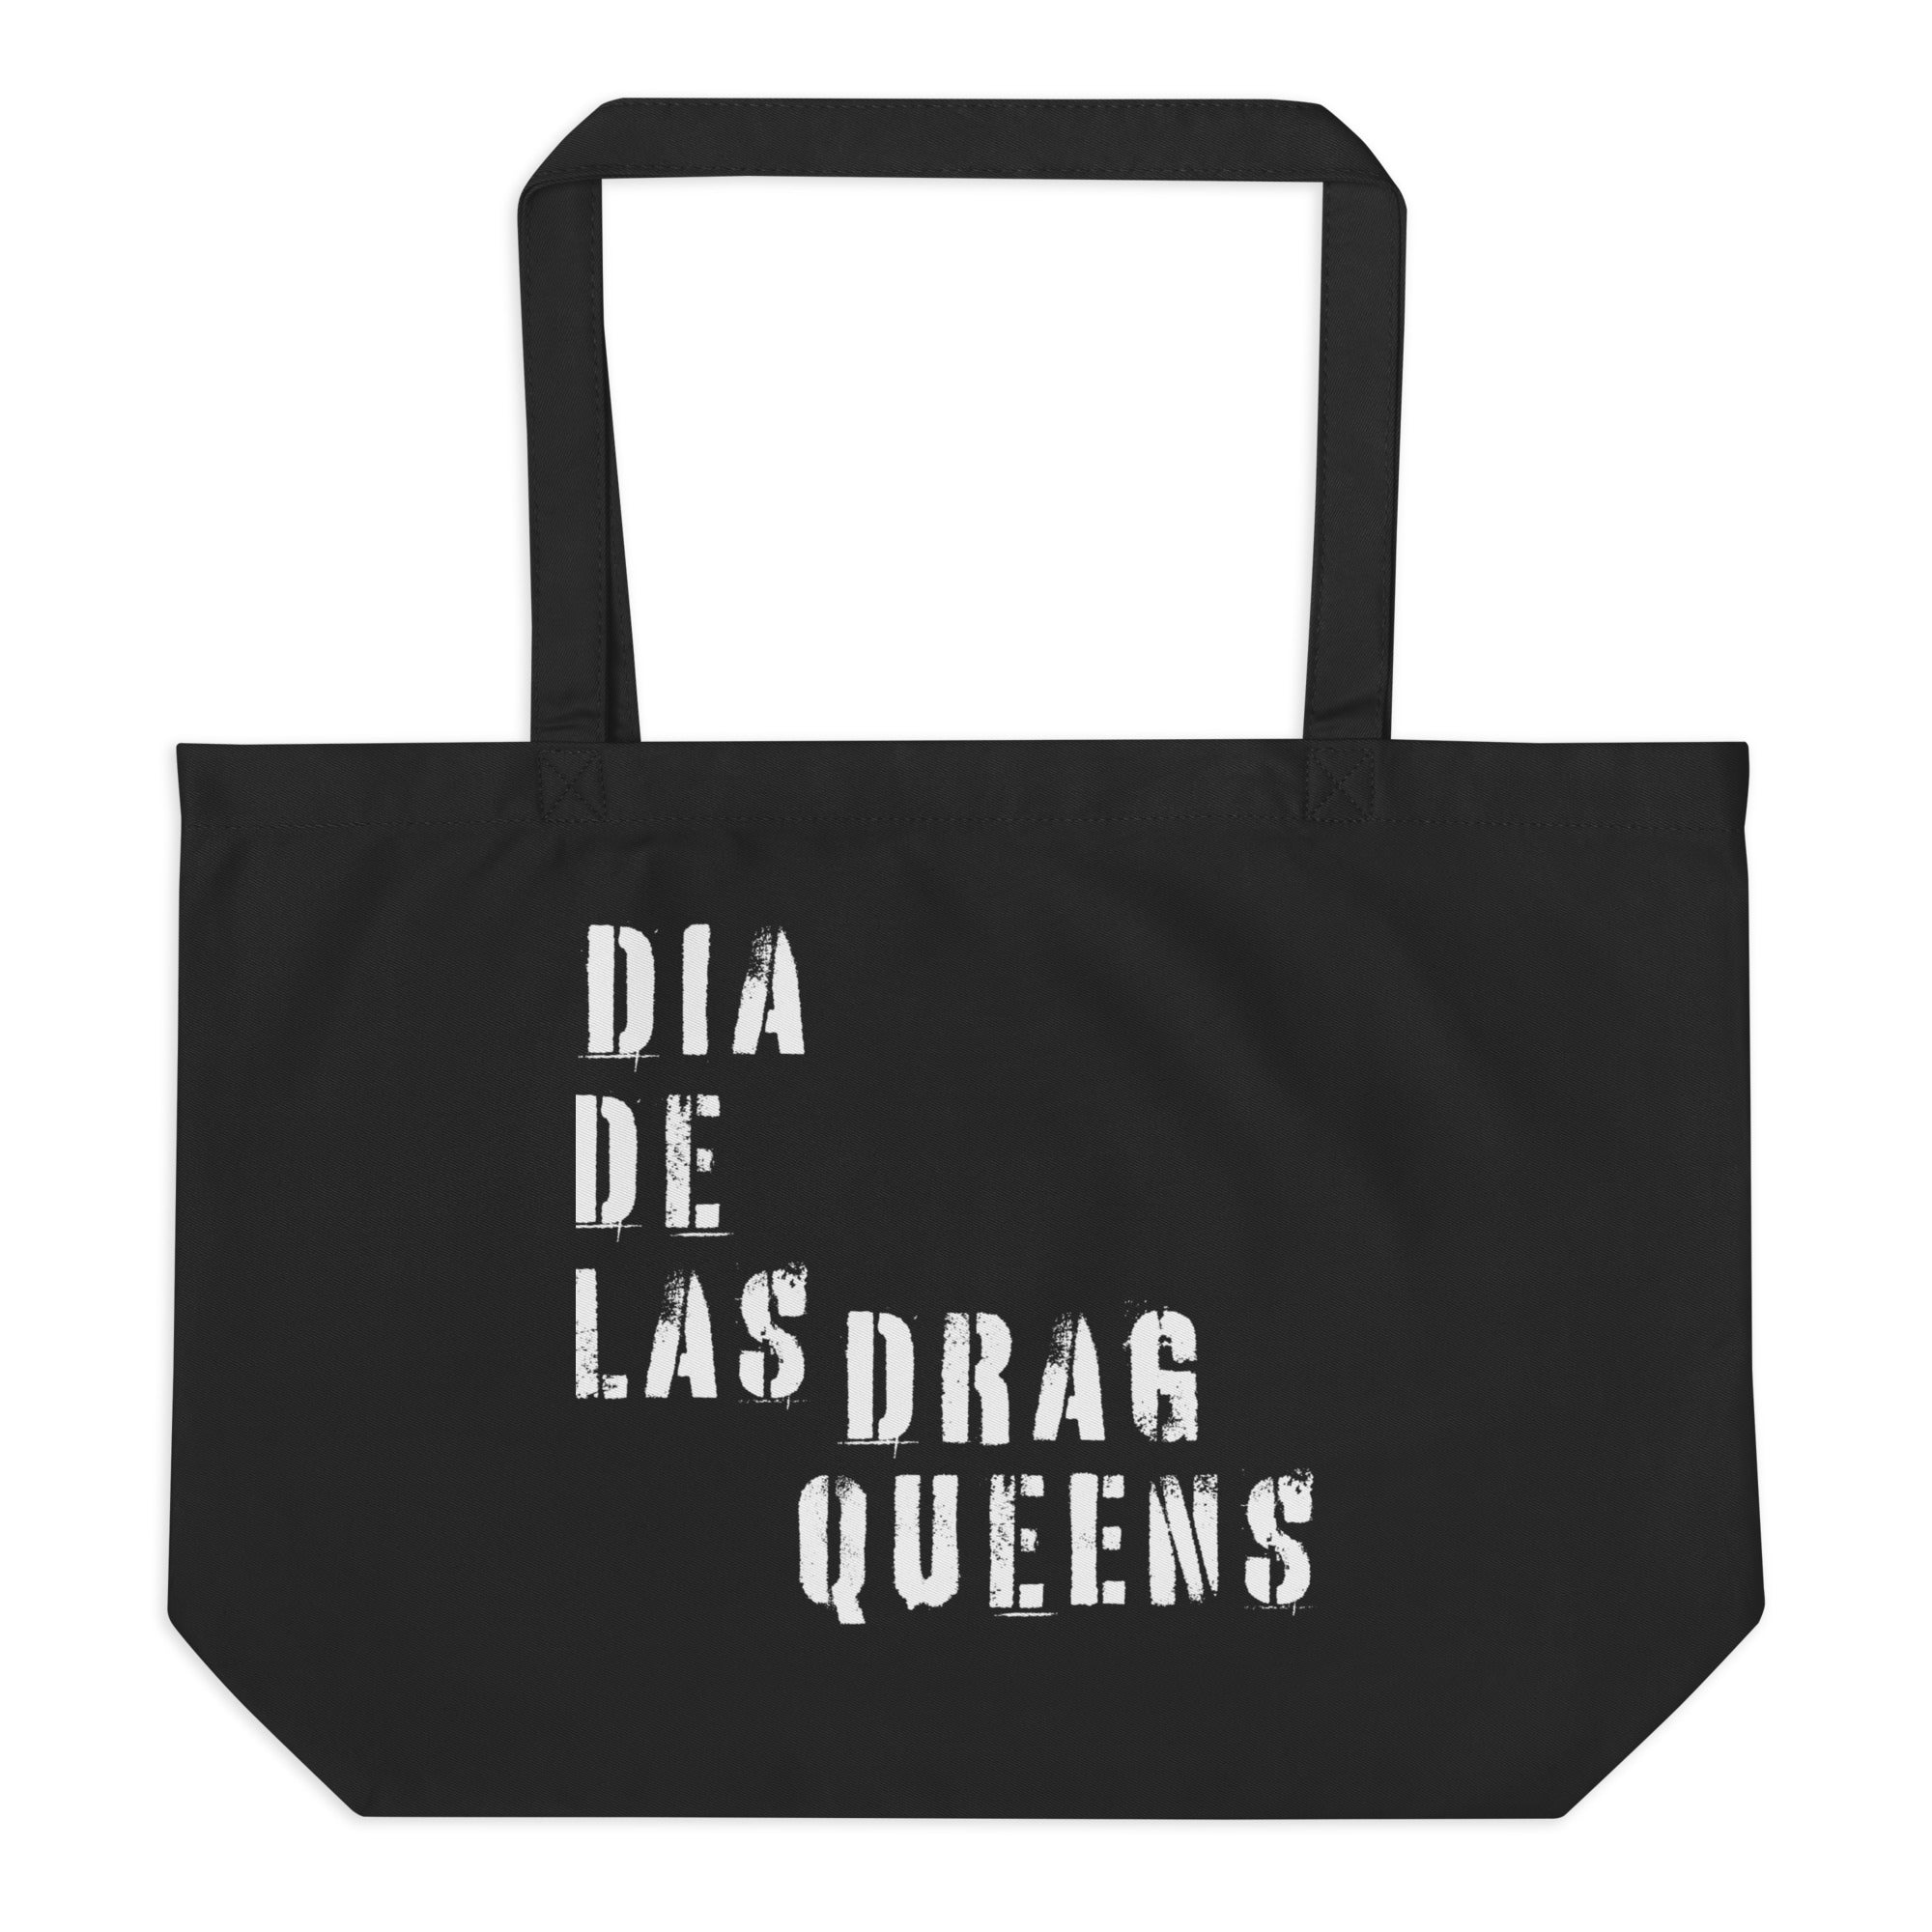 Dia de las Drag Queens Logo 02 merchandise bag